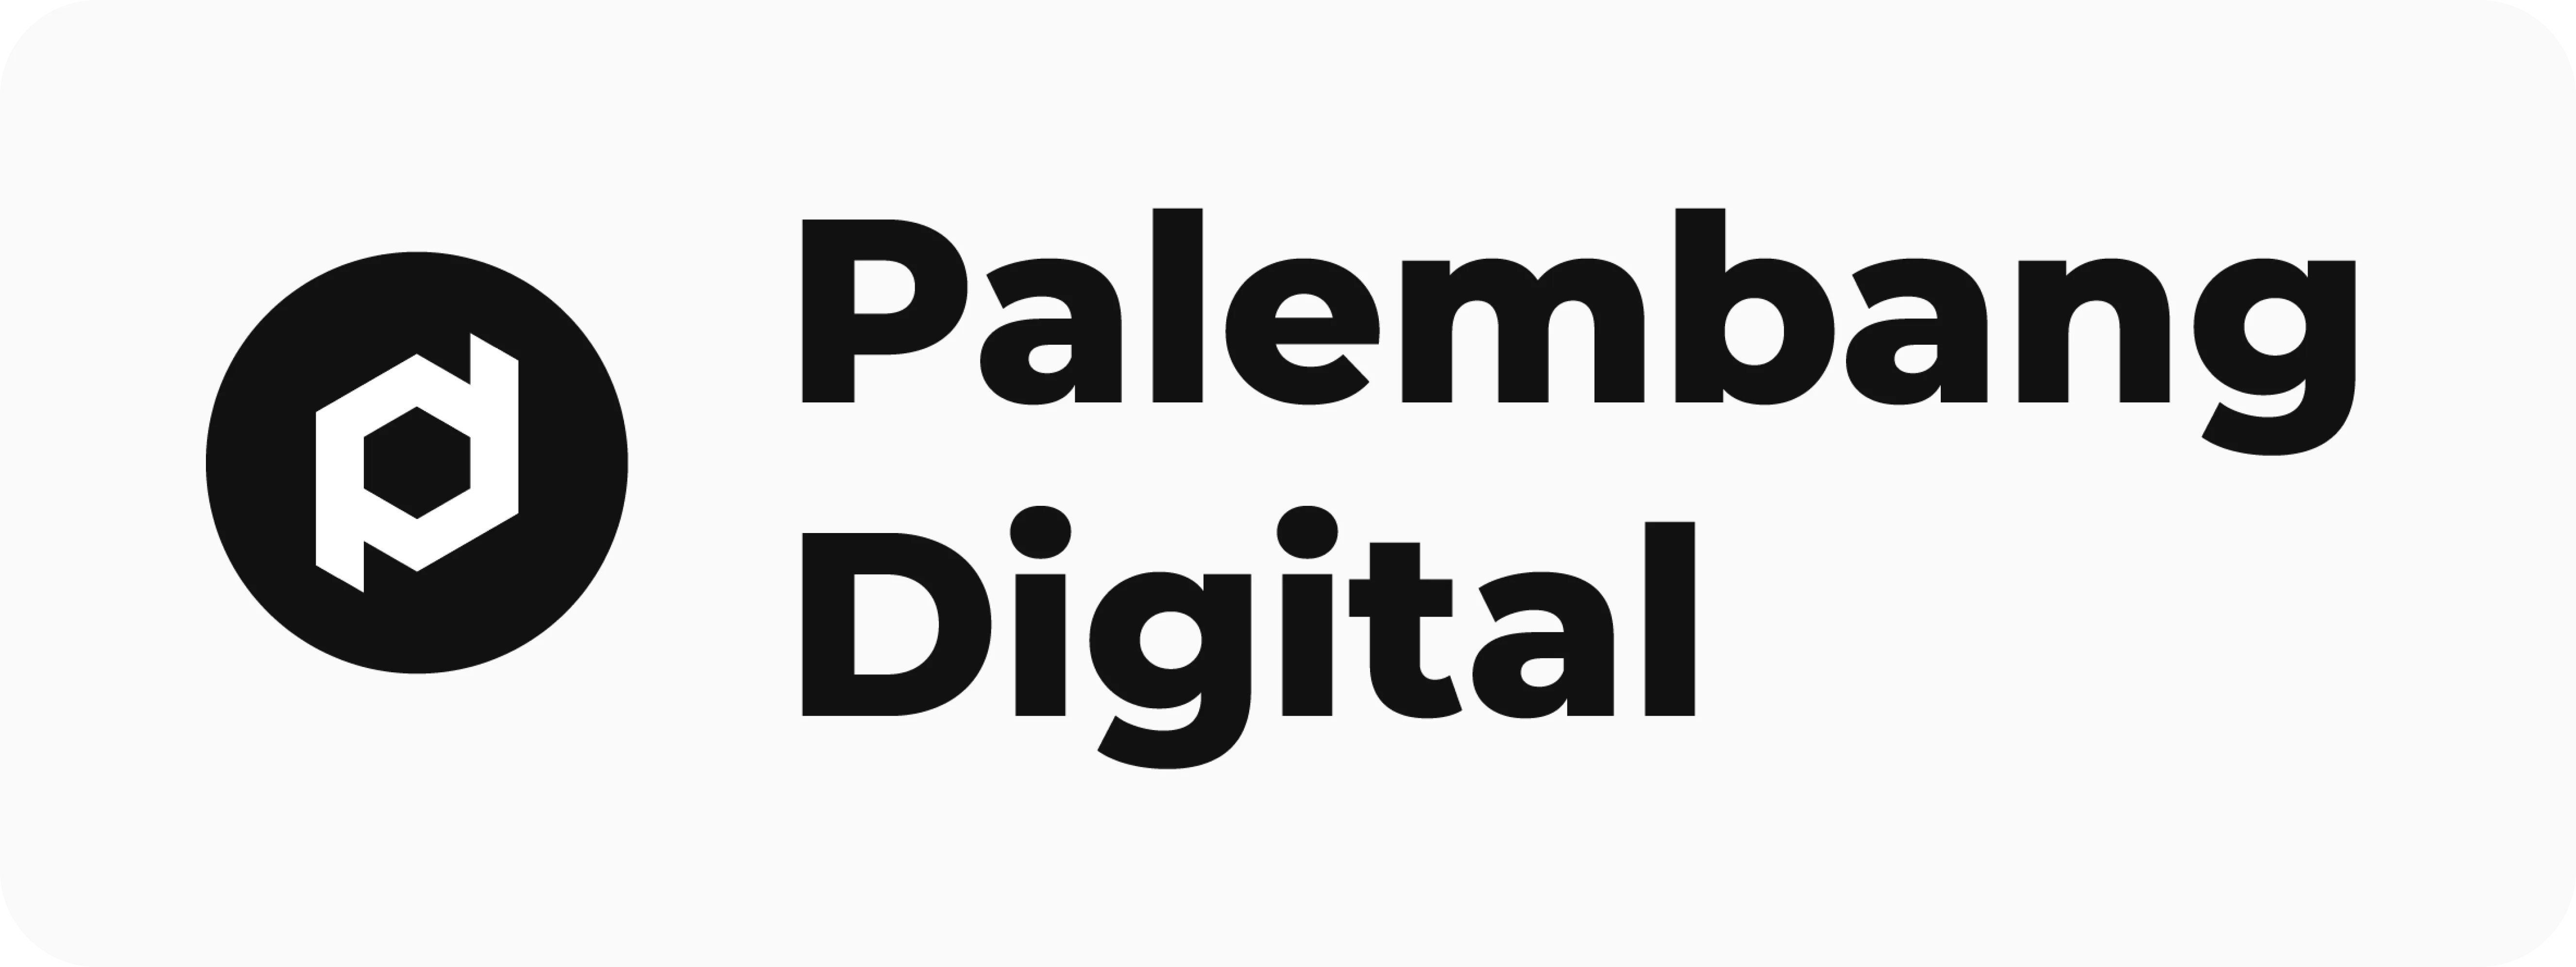 A screenshot of Palembang Digital